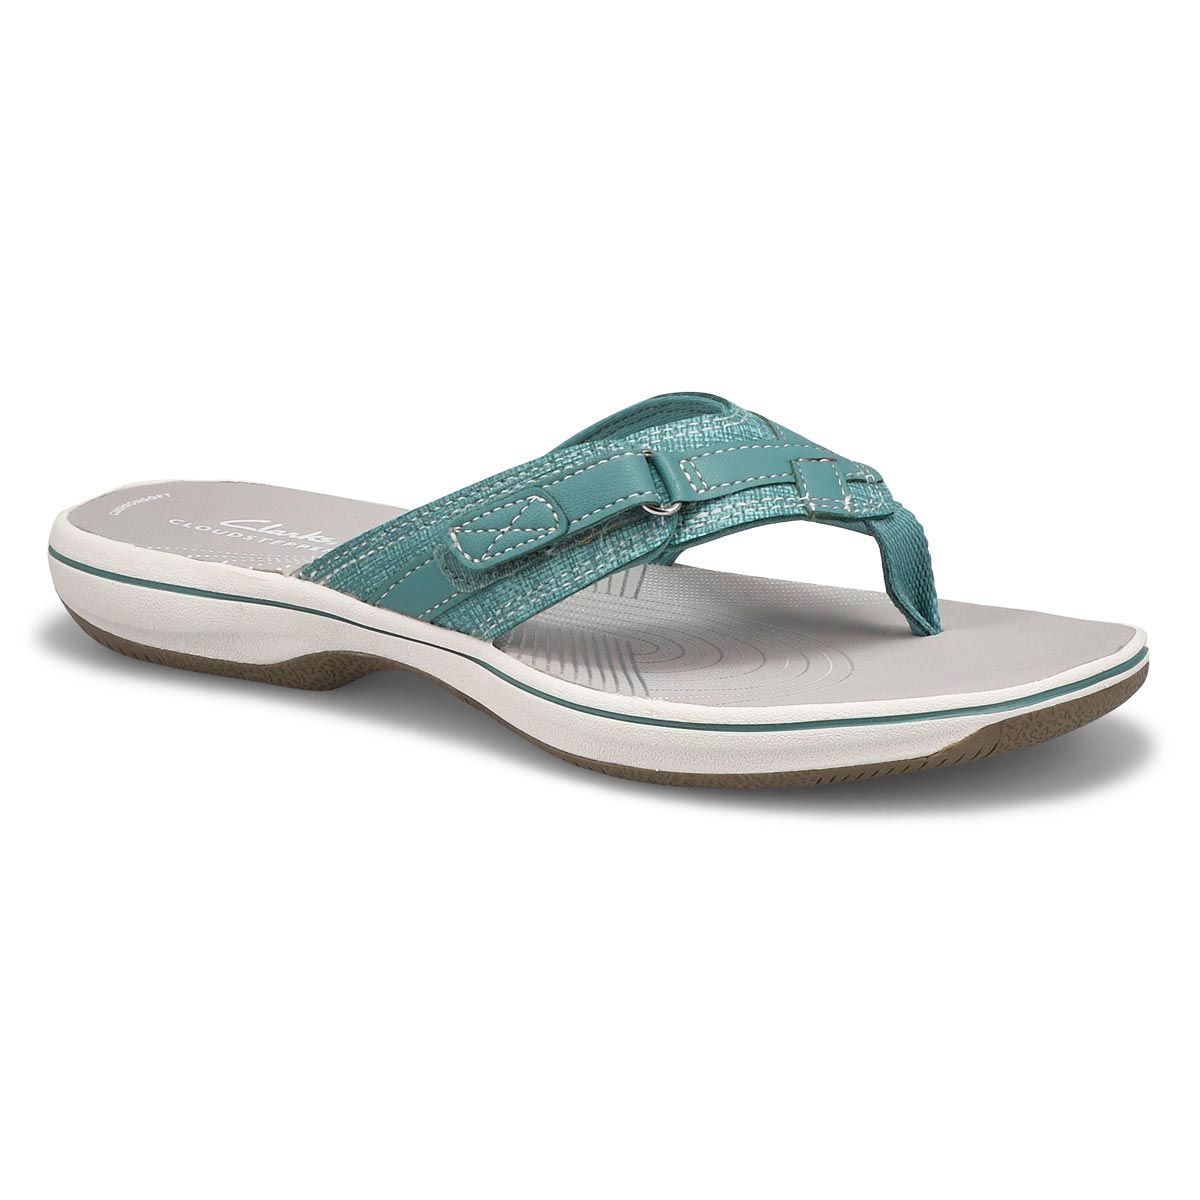 Clarks Women's Breeze Sea Thong Sandal - Lave | SoftMoc.com